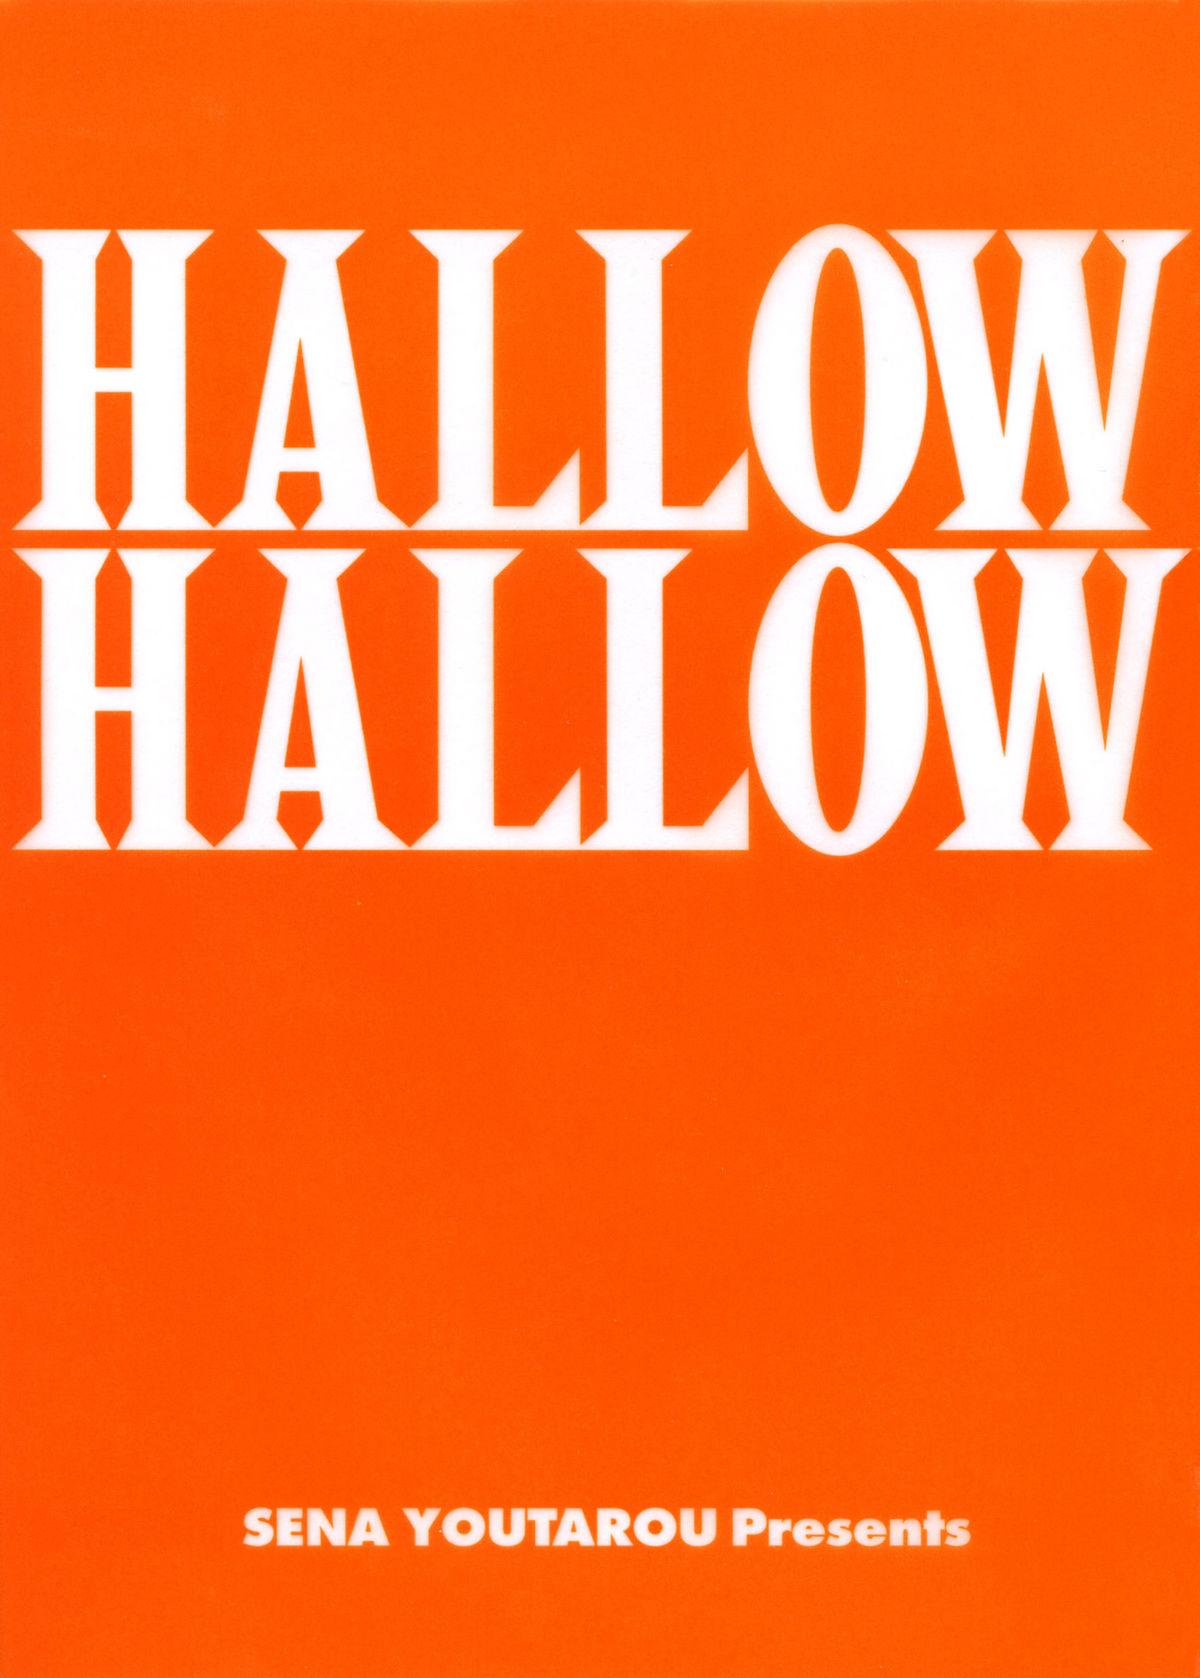 Hallow Hallow 2